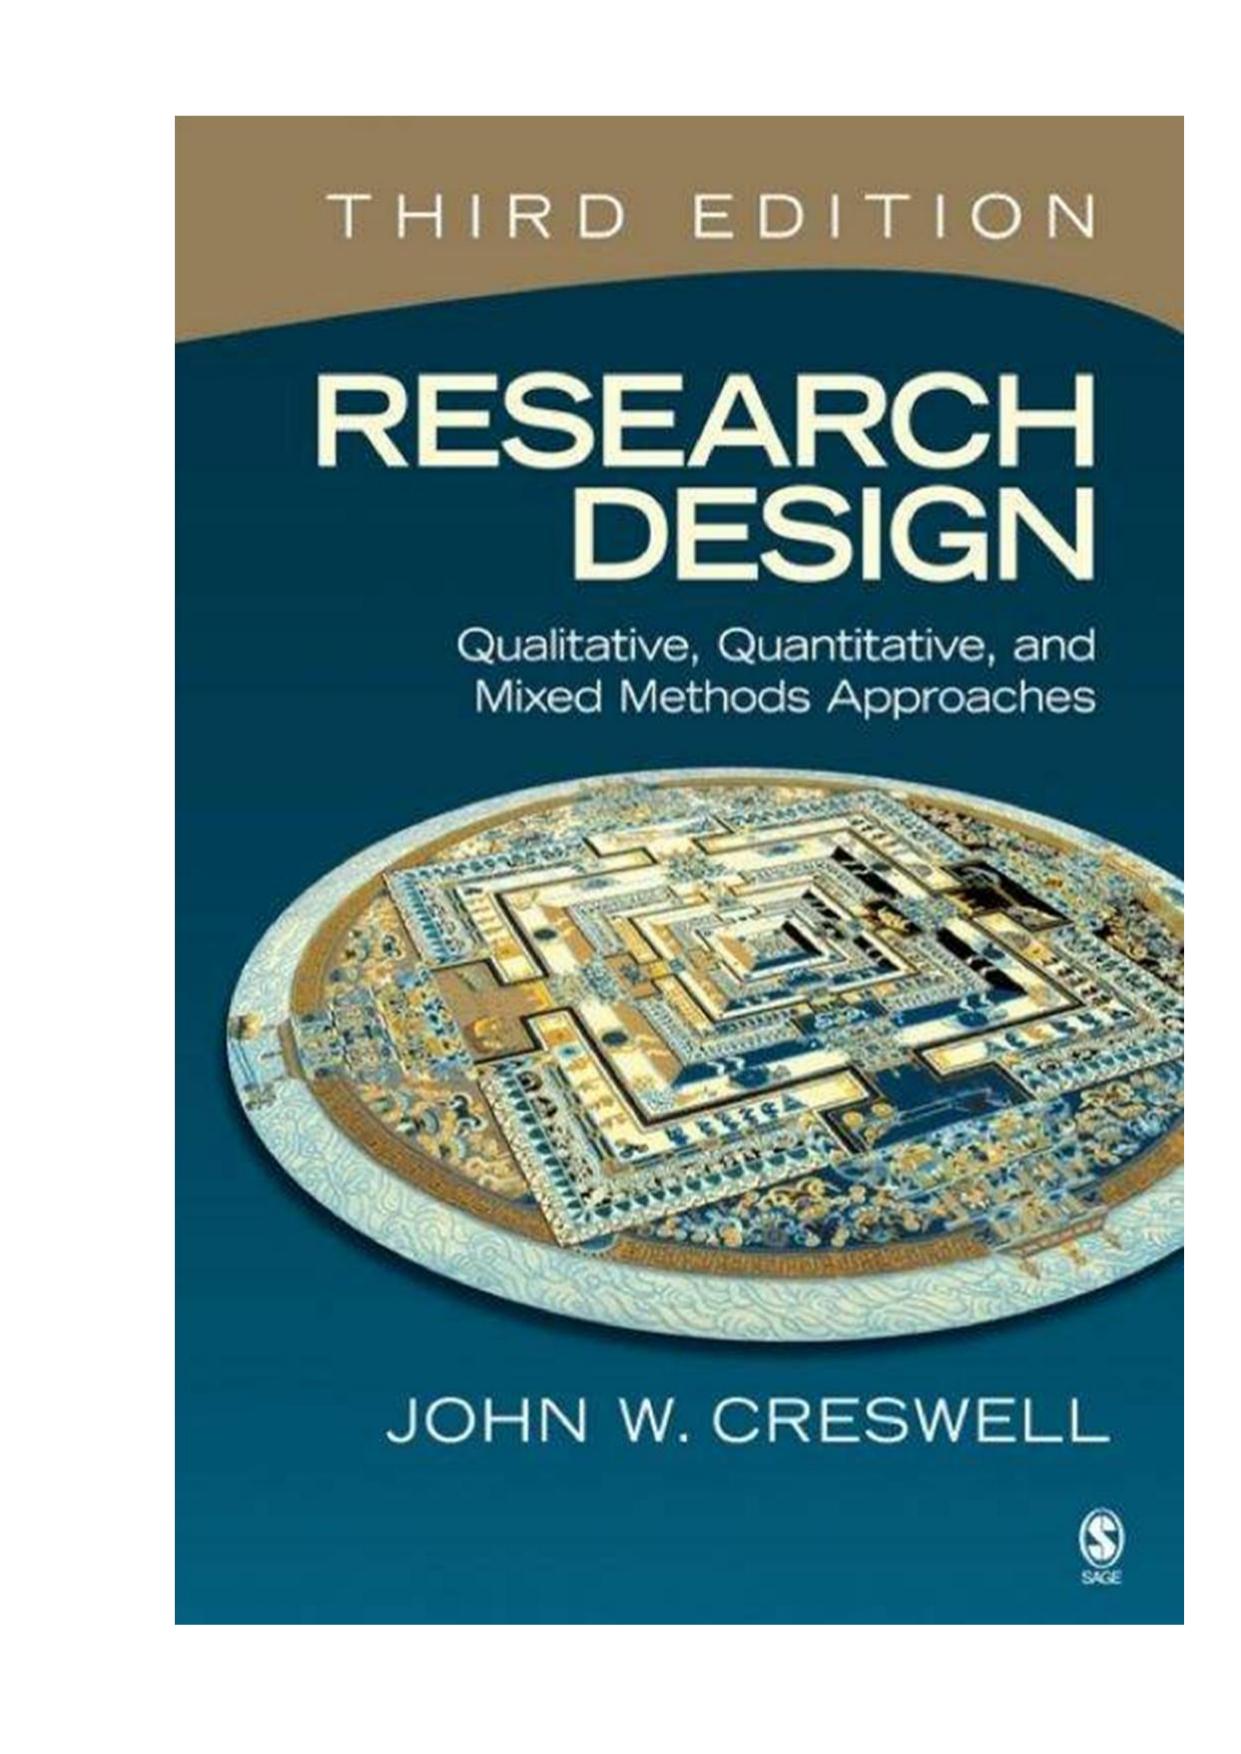 Research Design  Qualitative, Quantitative, and Mixed Methods Approaches 3rd ed 2009( PDFDrive.com )